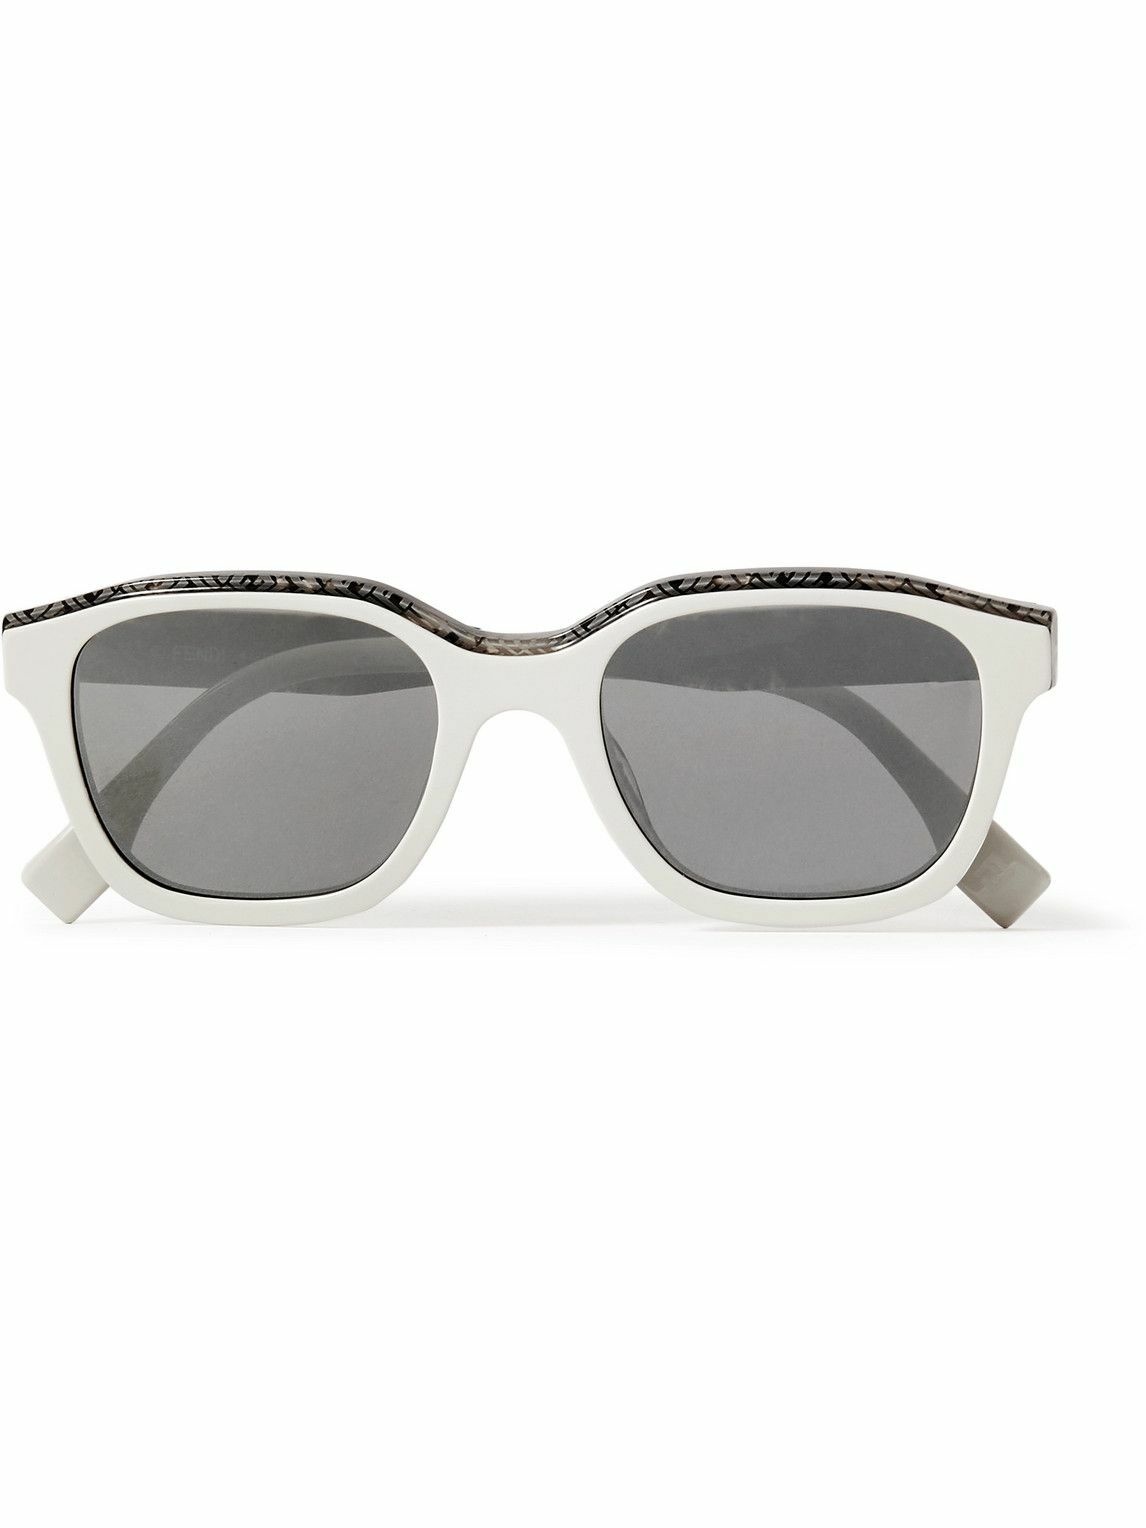 Fendi - Bilayer Square-Frame Acetate Sunglasses Fendi